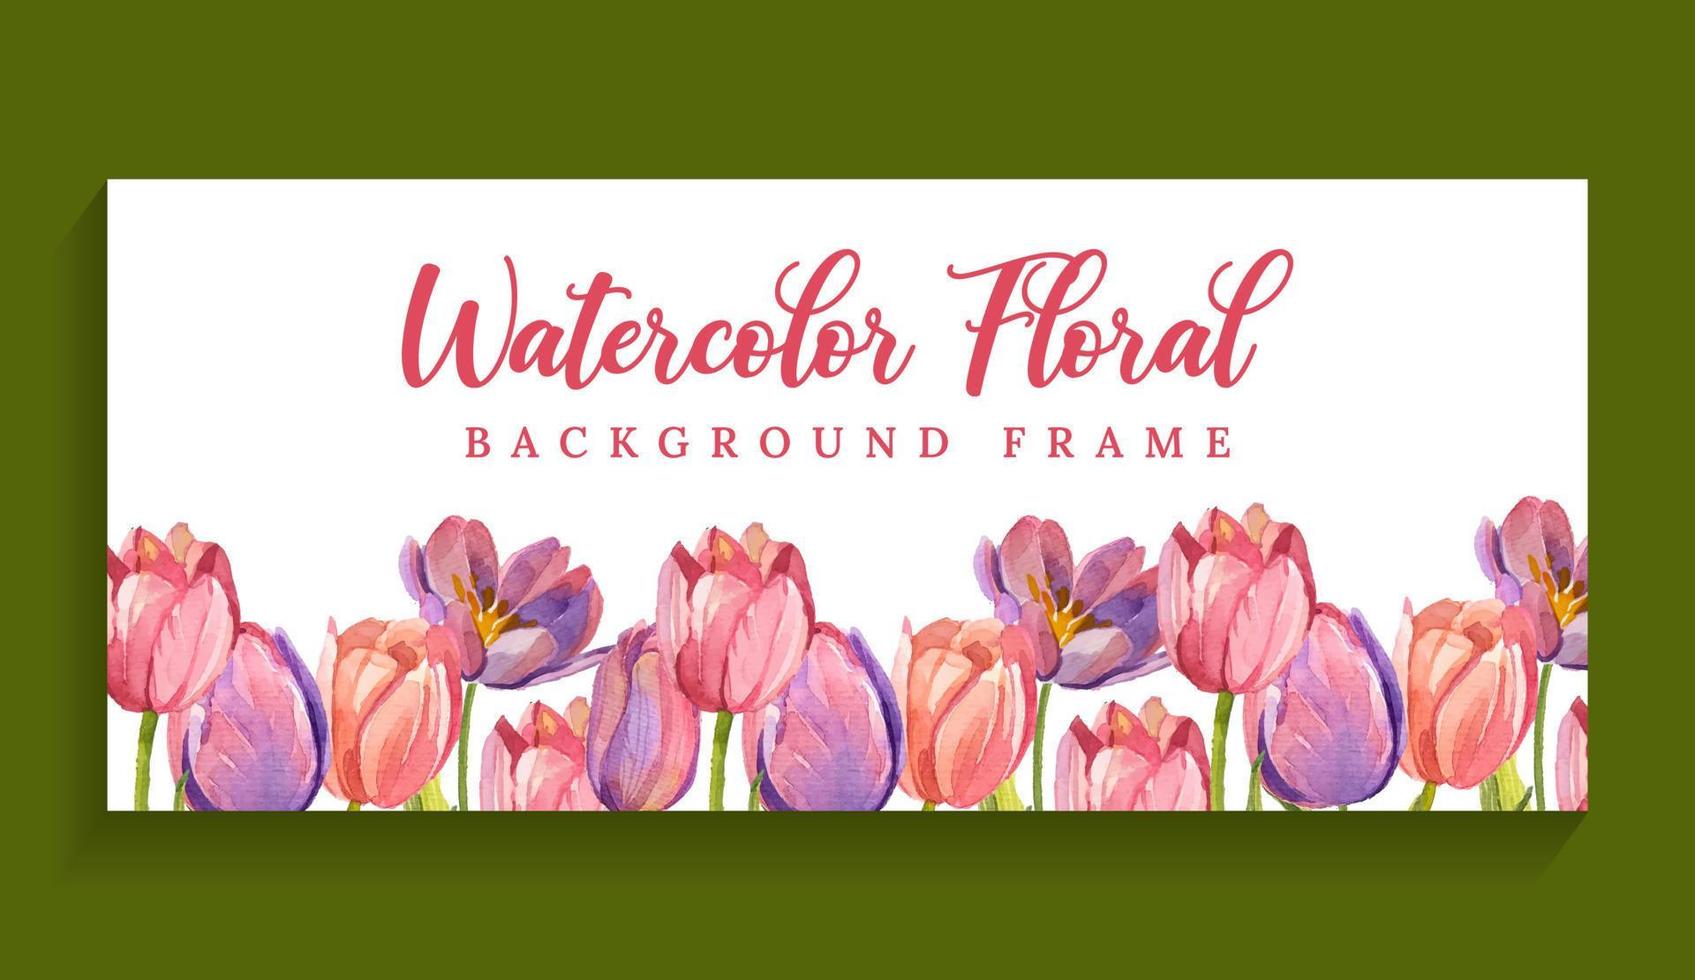 watercolor floral banner background frame vector